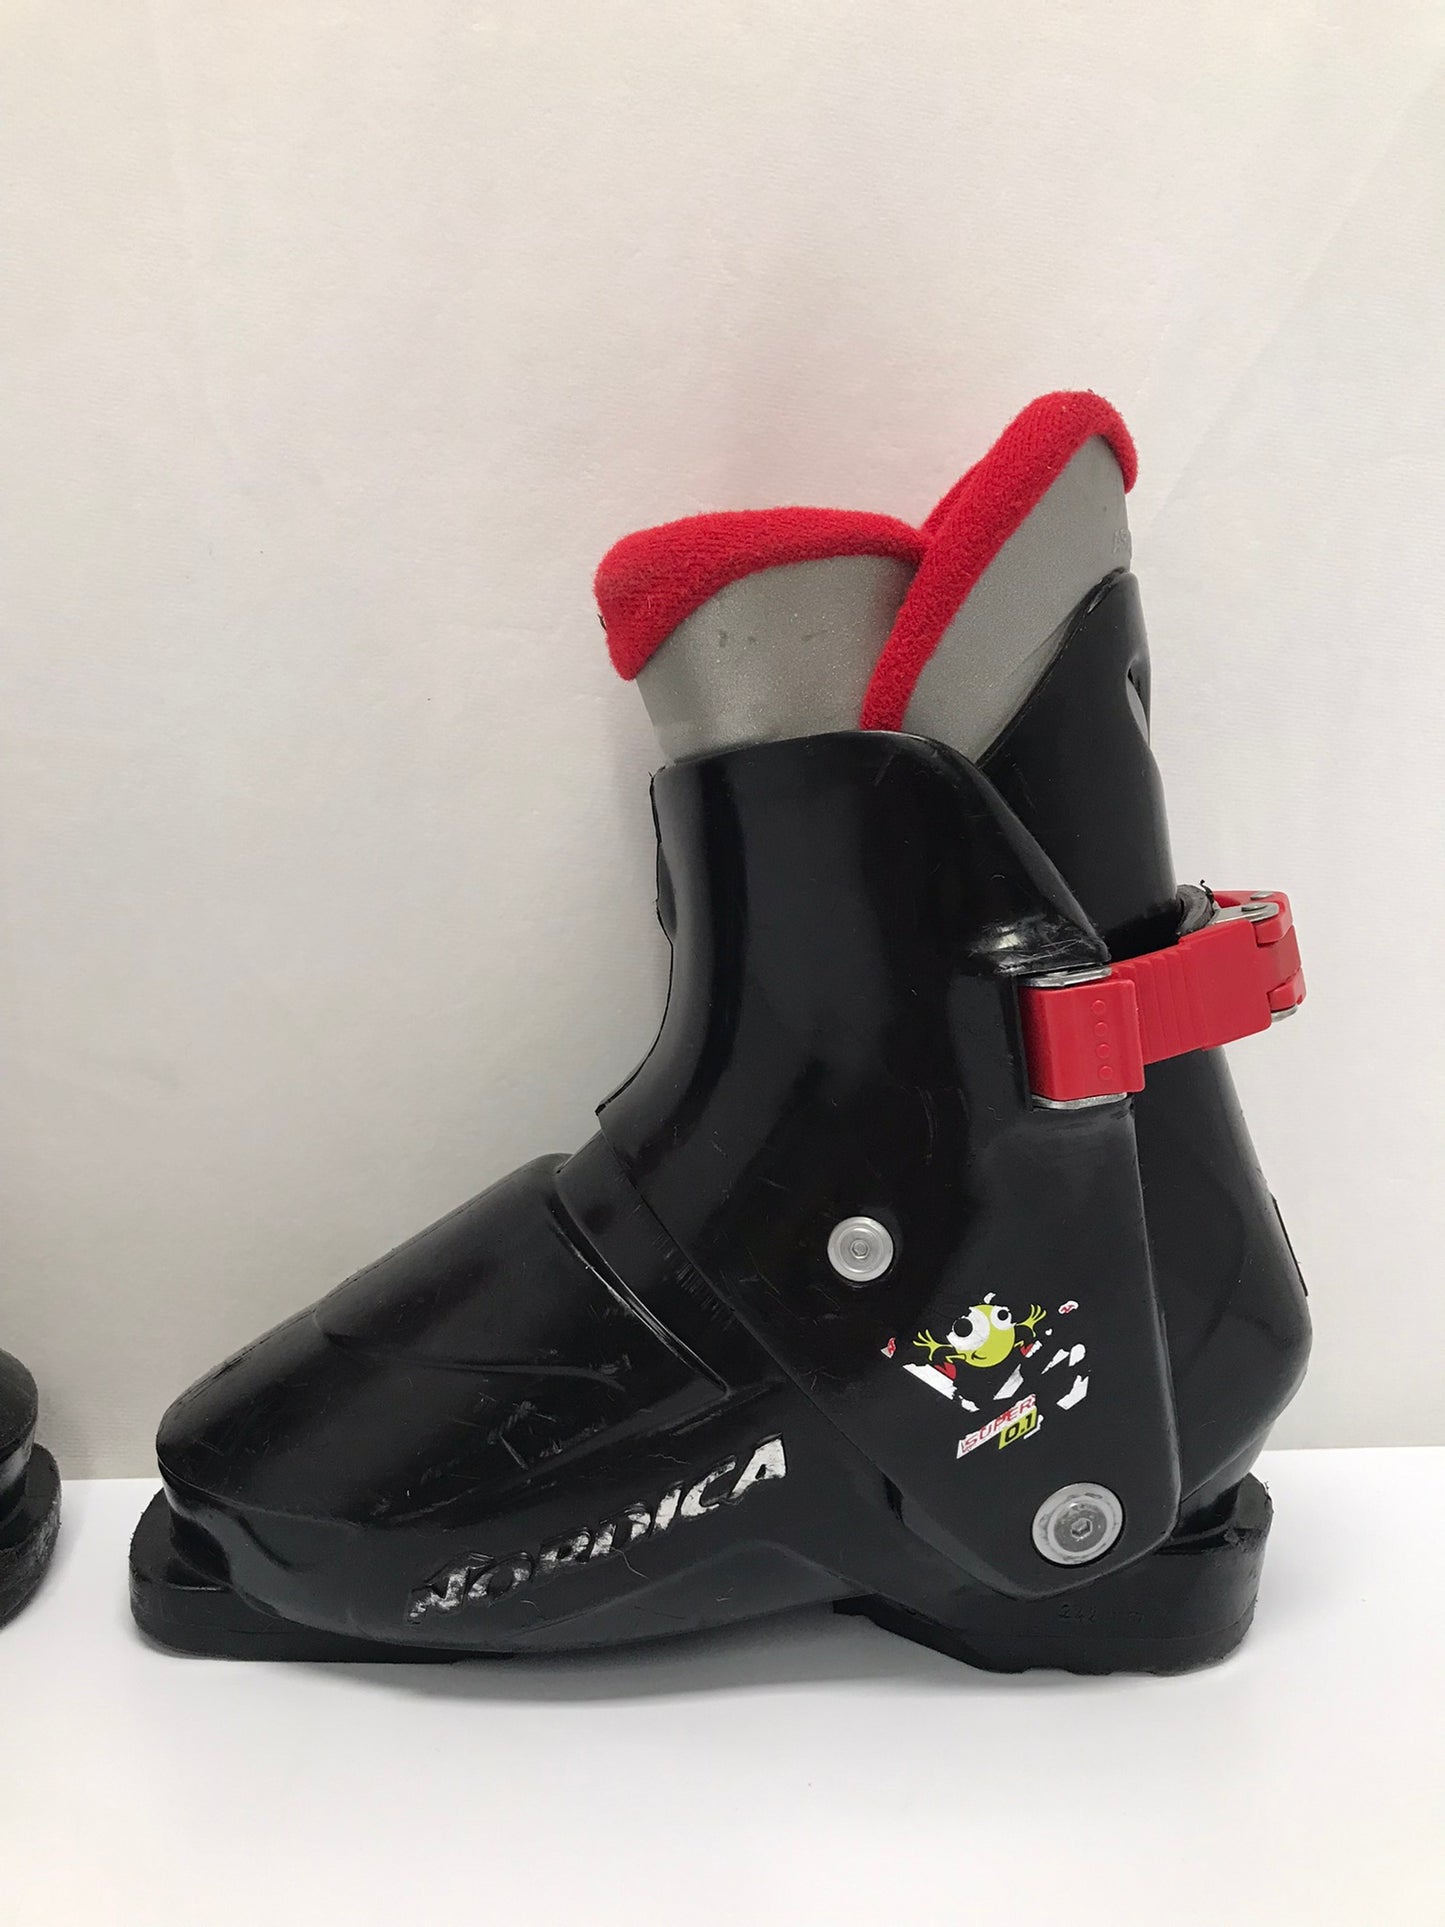 Ski Boots Mondo Size 19.0 Child Size 13 242  mm Nordica Black Red Some Scratches